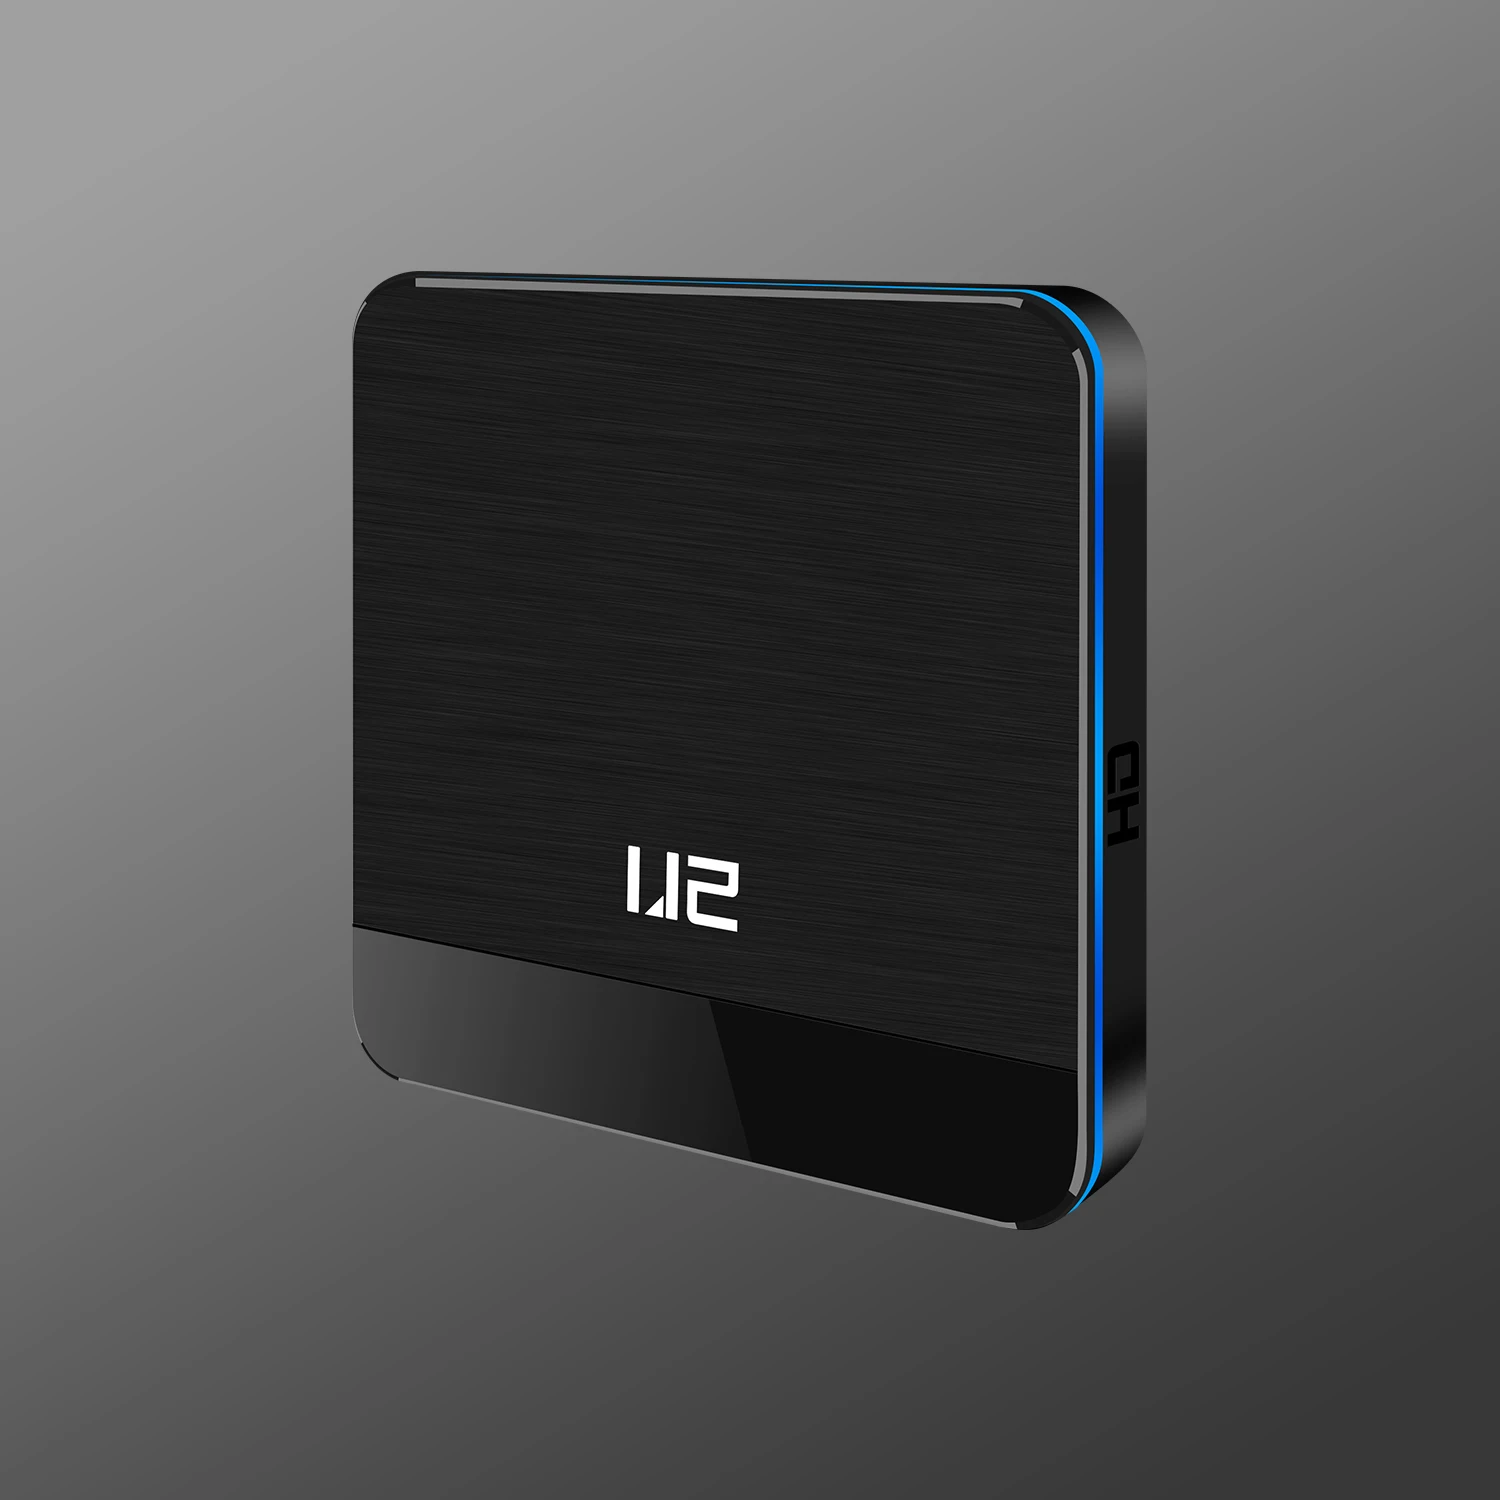 2021 U2 интернет-Tvbox S905w Android 9,1 4k Smart Ott Tv Box